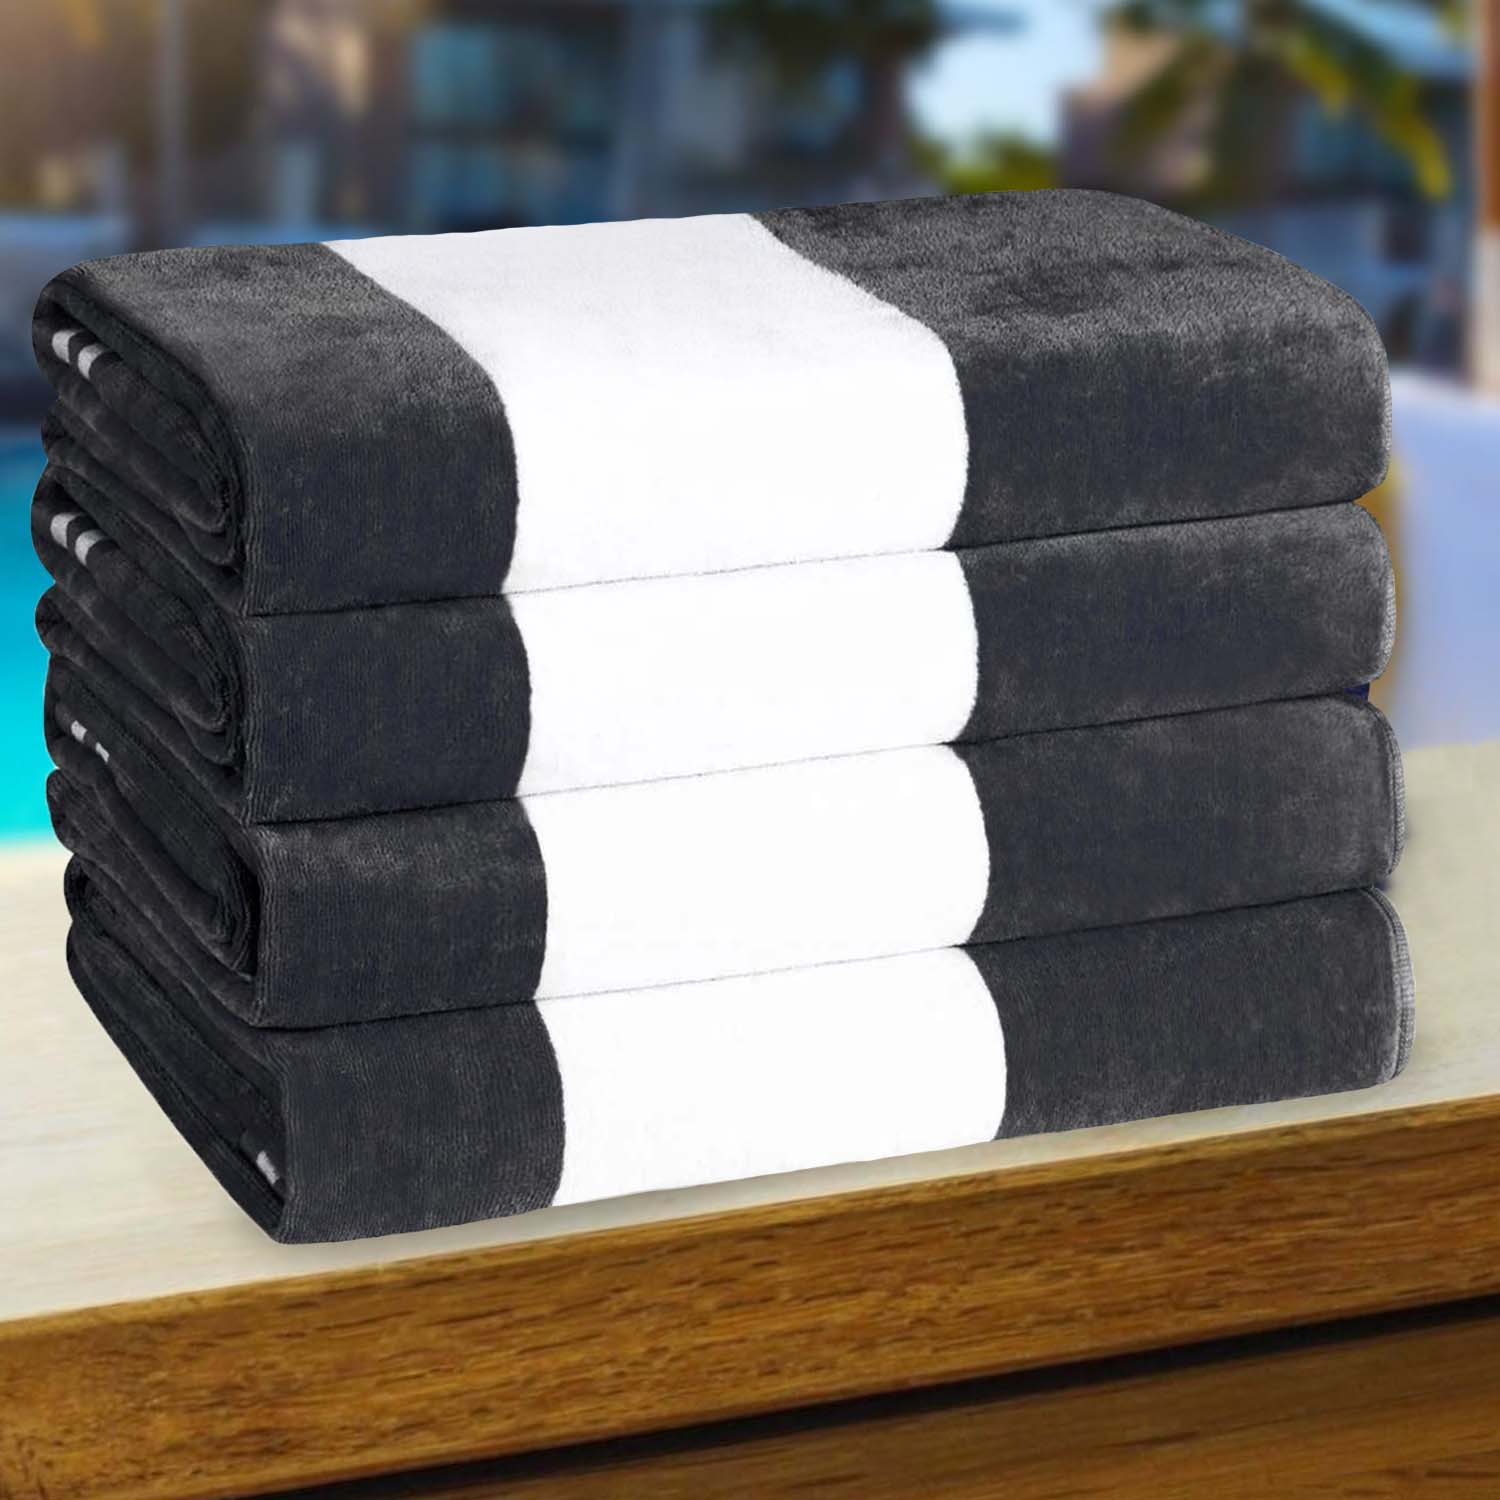 Superior Cabana Stripe Oversized Cotton Beach Towel Set Of 2,4,6 - Charcoal